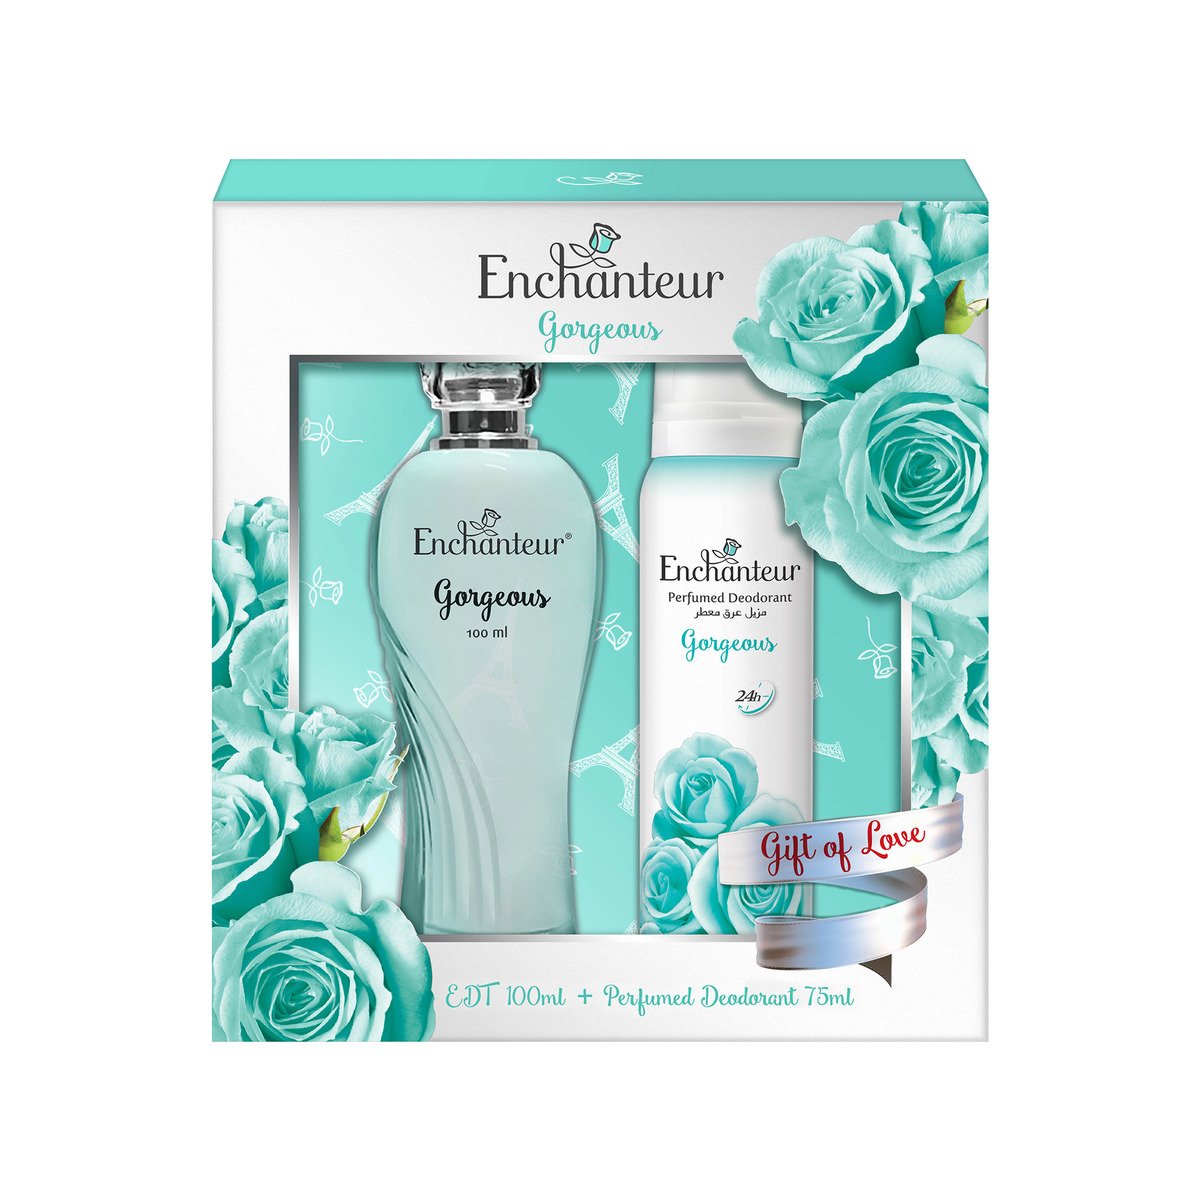 Enchanteur EDT Gorgeous 100ml + Perfumed Deodorant 75ml